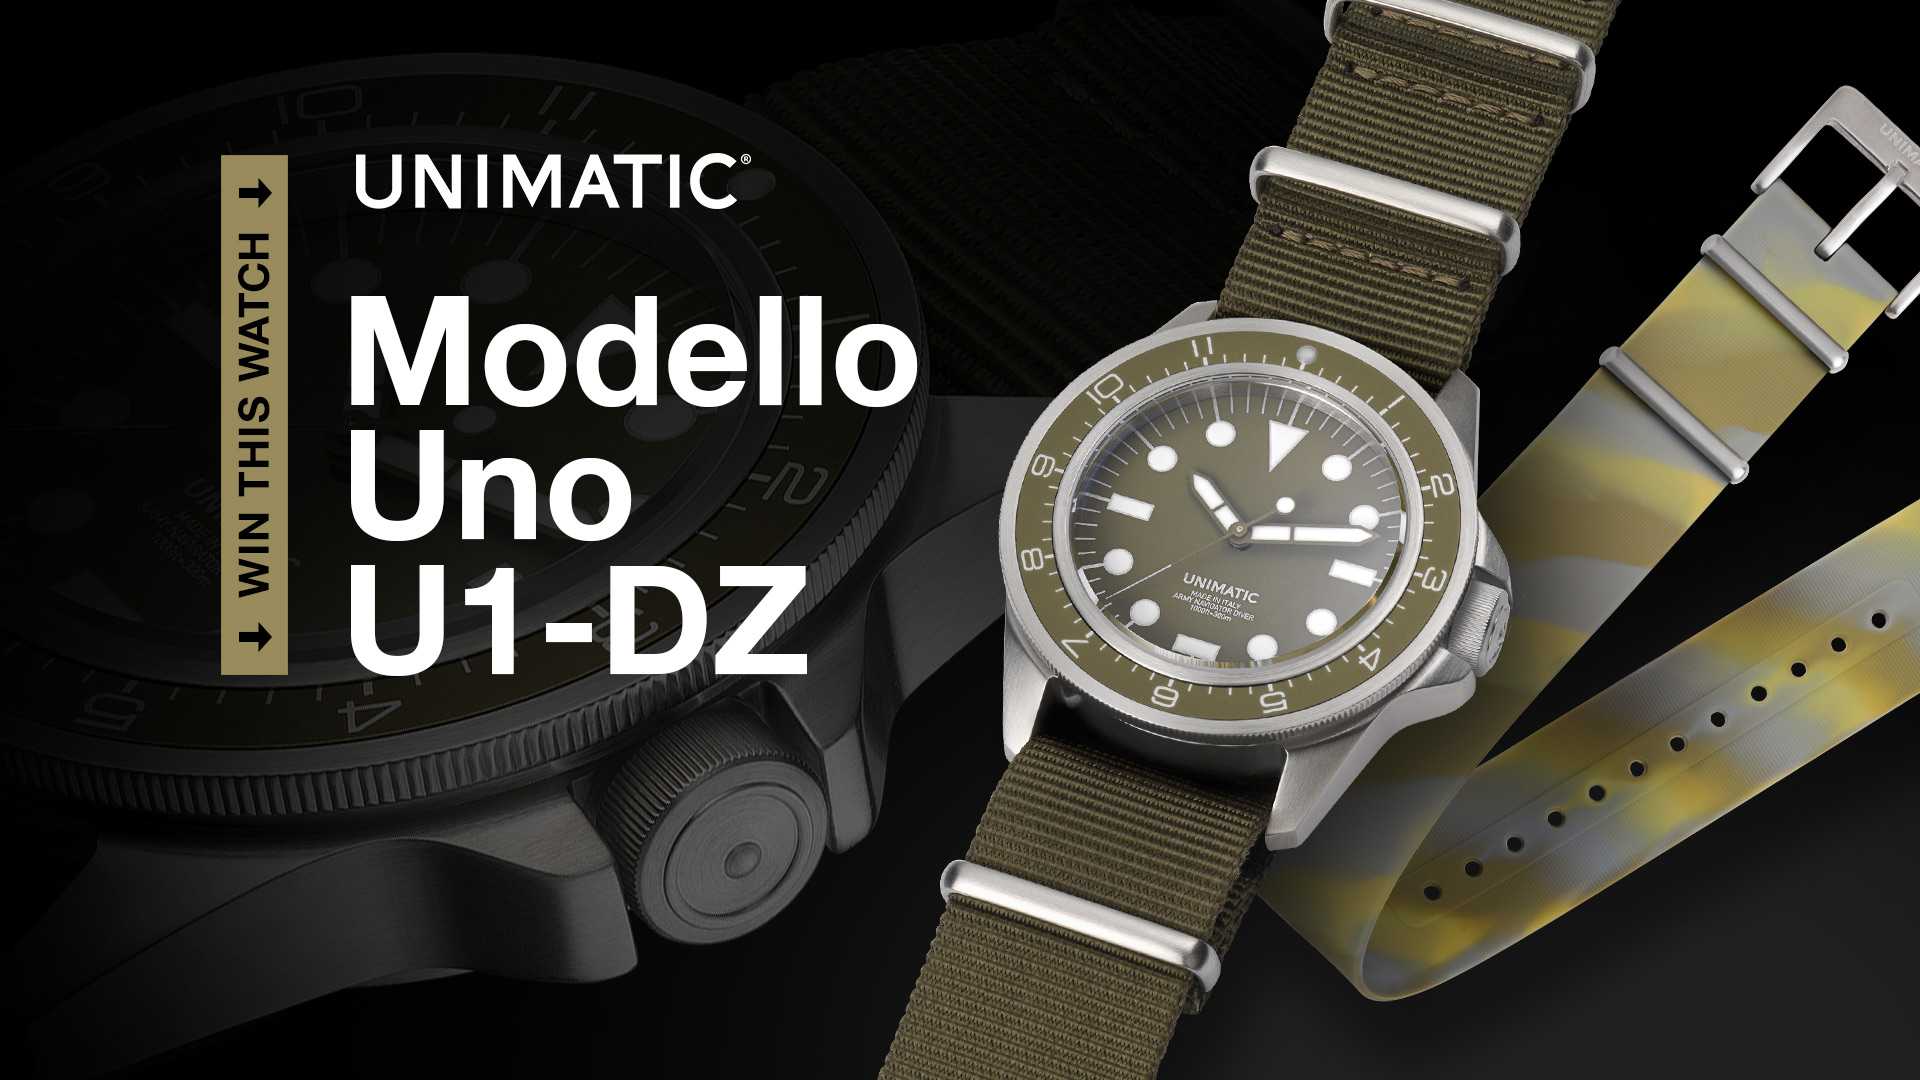 LAST CHANCE: Unimatic Modello Uno U1-DZ Limited Edition Watch Giveaway